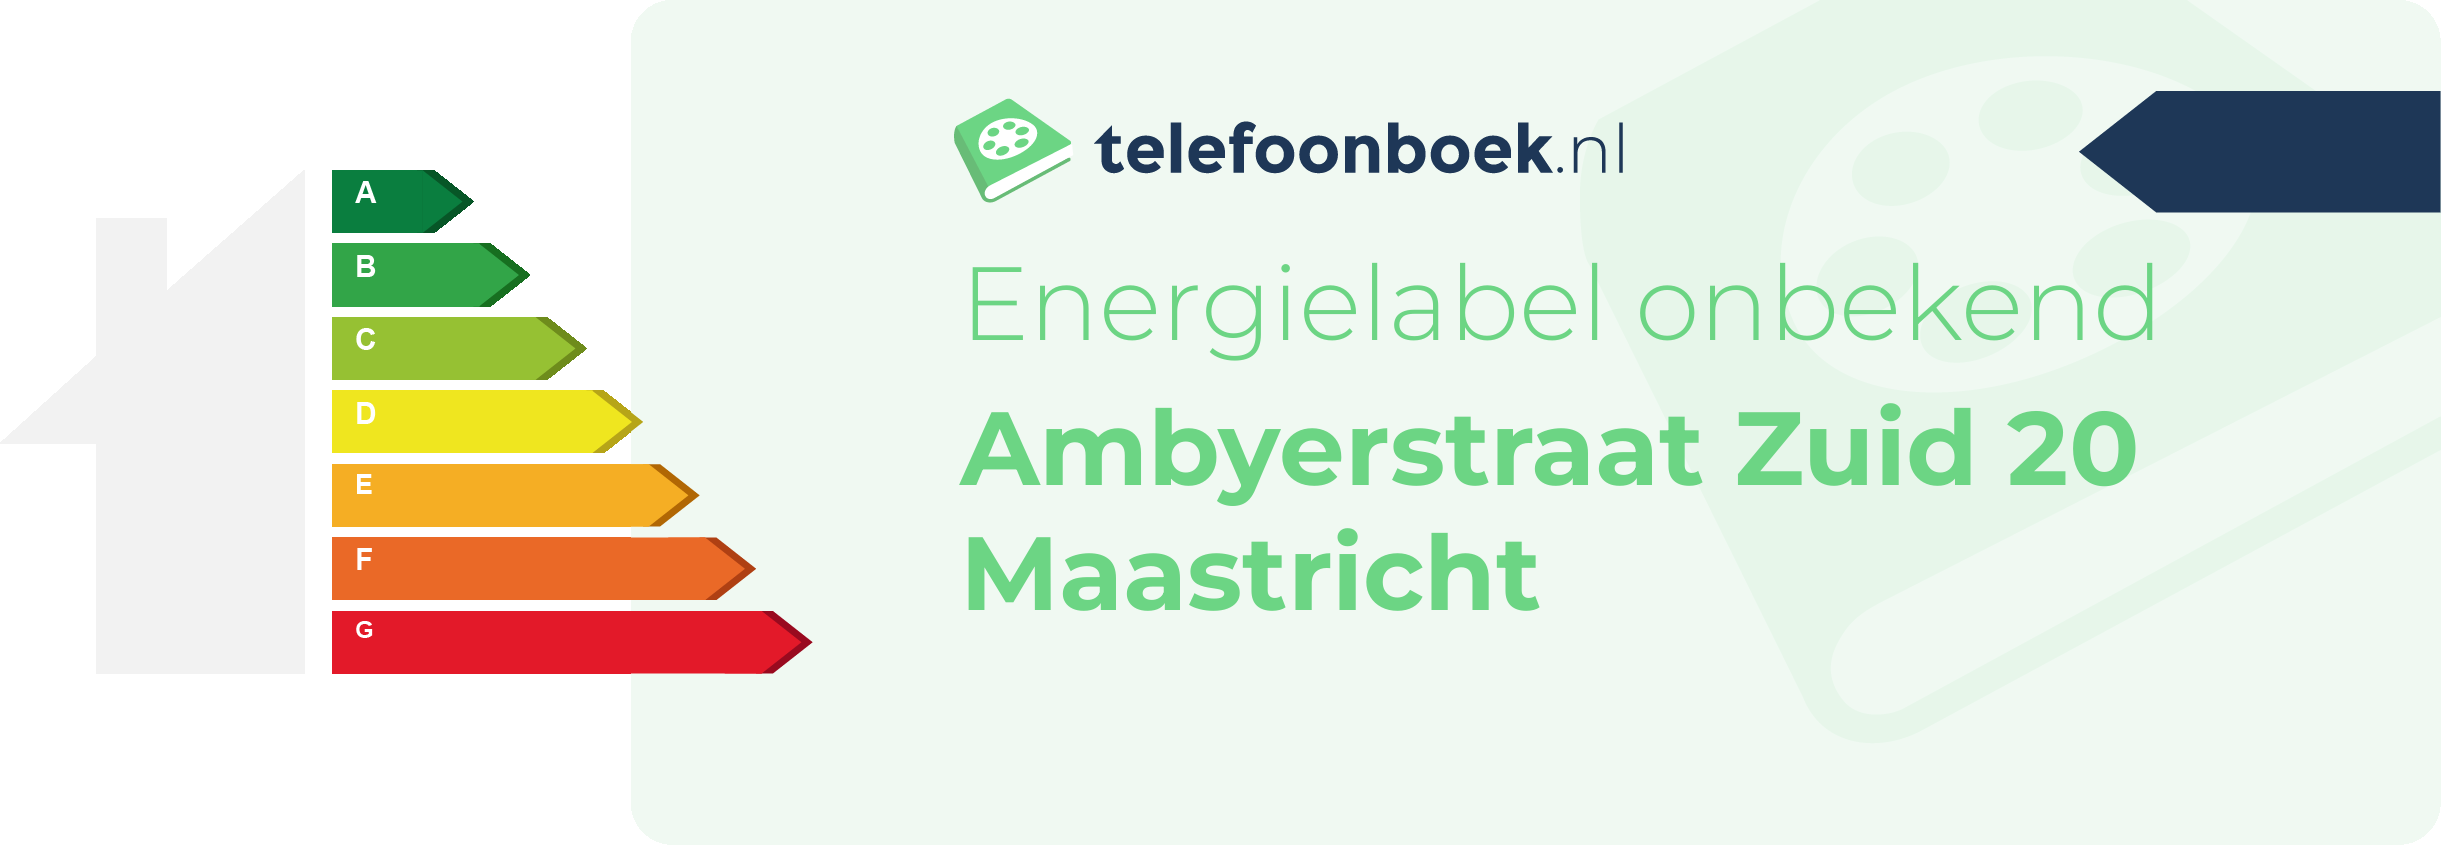 Energielabel Ambyerstraat Zuid 20 Maastricht